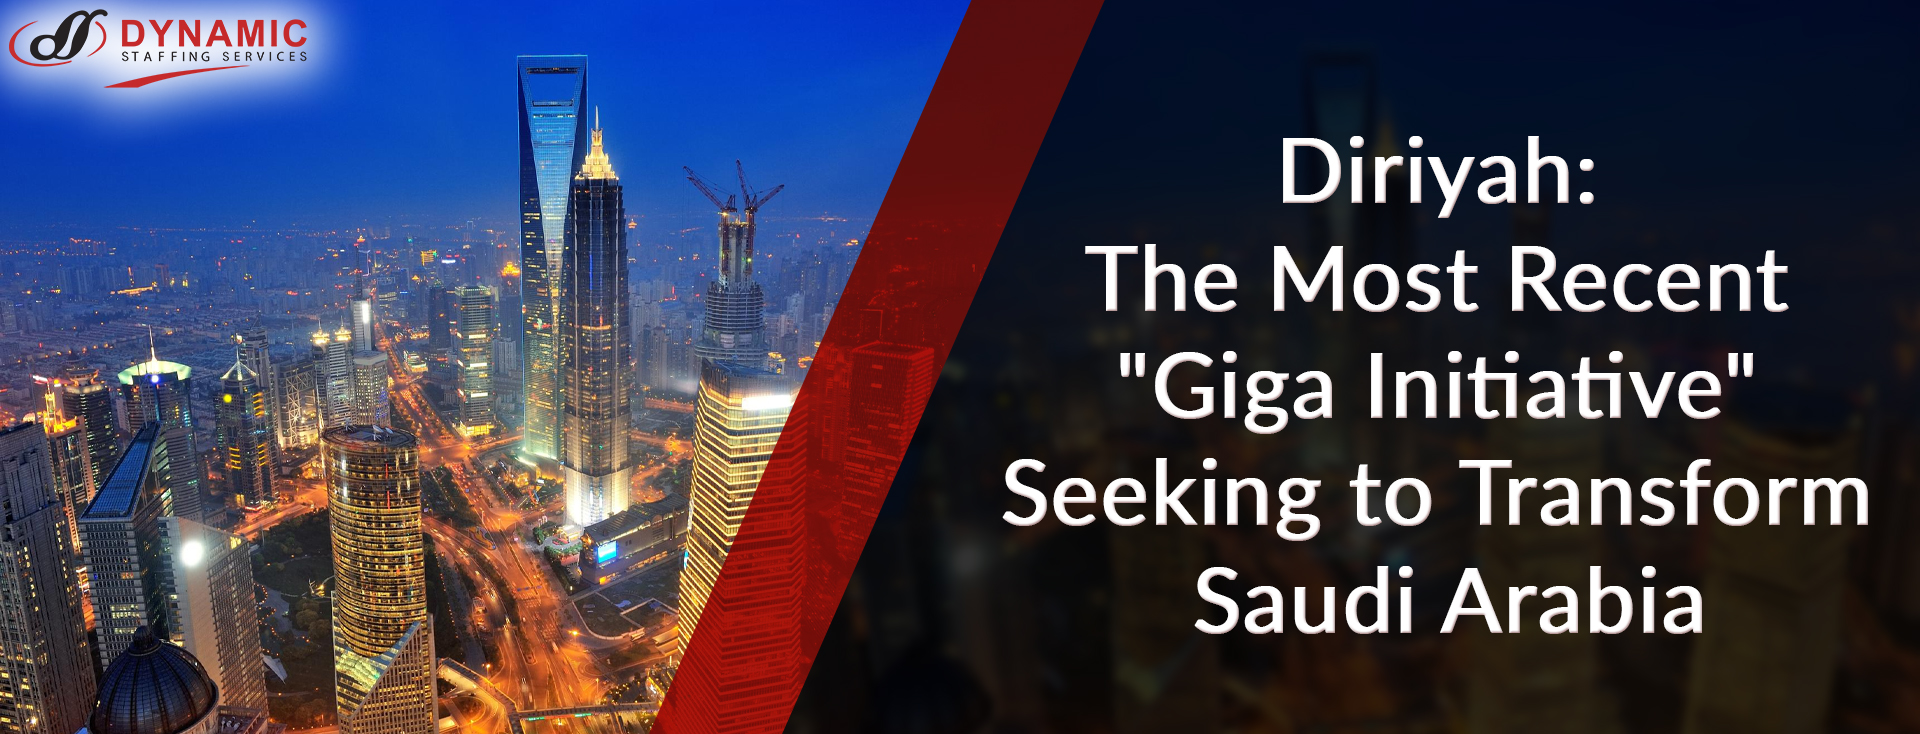 Diriyah: The Most Recent "Giga Initiative" Seeking to Transform Saudi Arabia